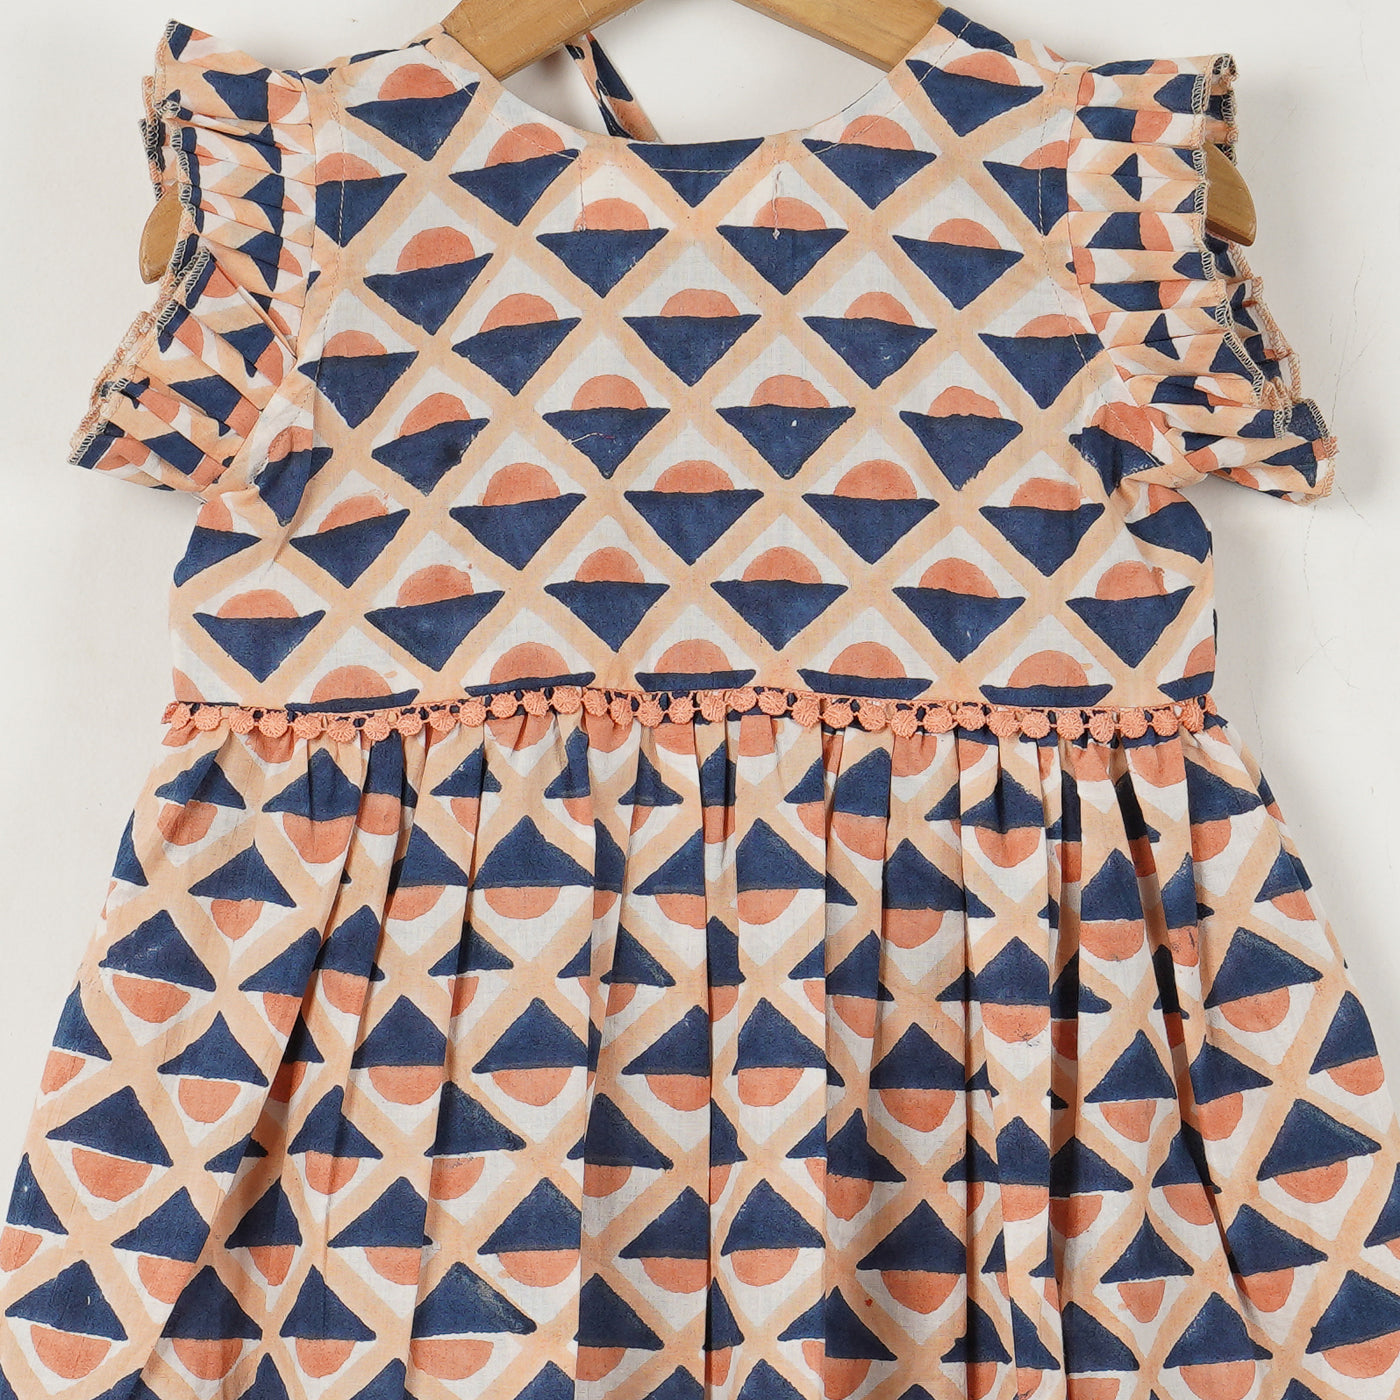 ZIANA - Blue and Peach Printed Girls Dress